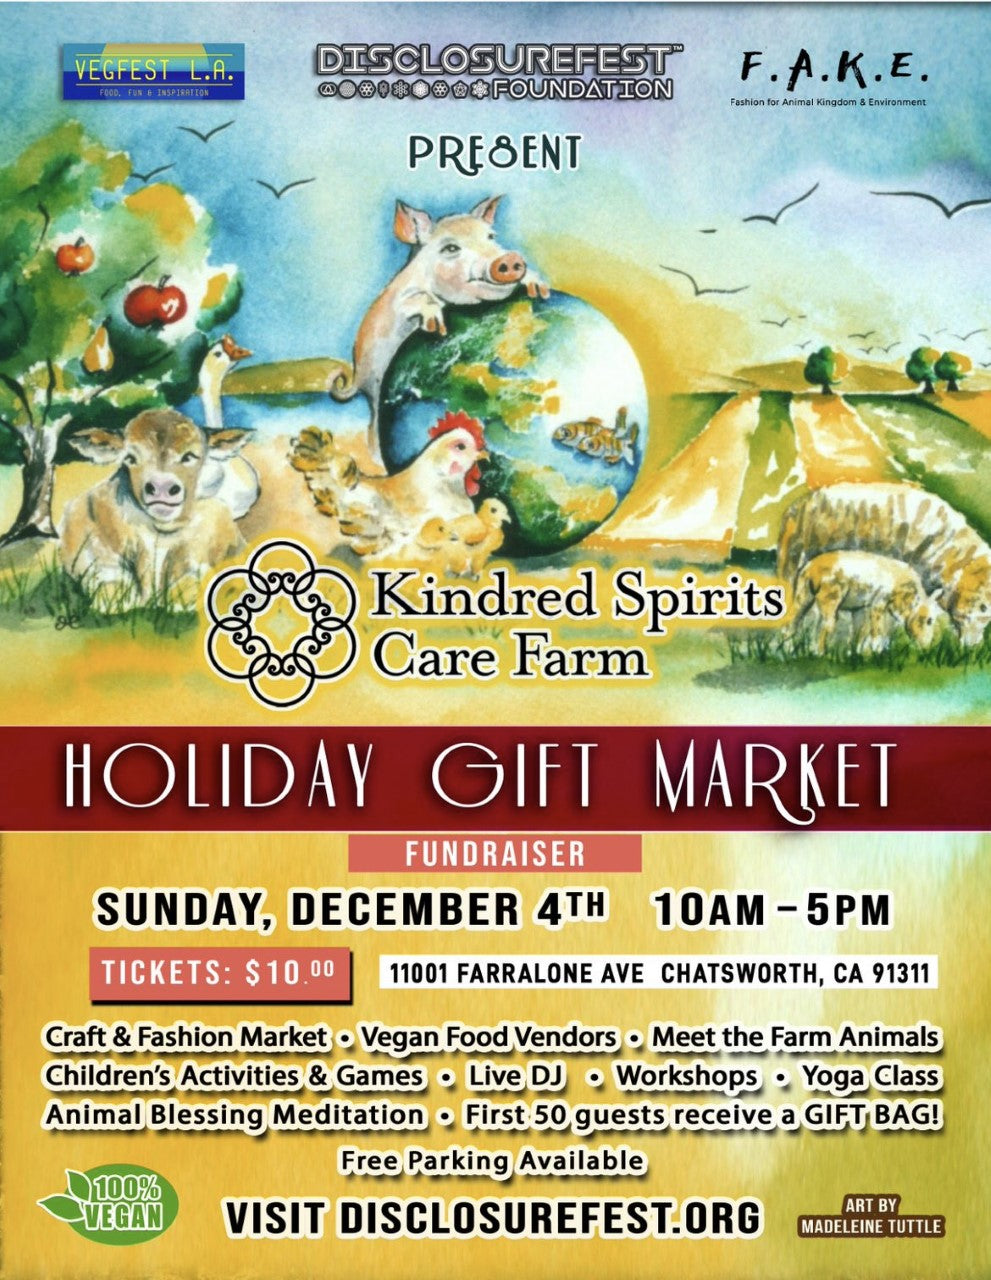 A Holiday Craft Fair Fundraiser Vendor Booth